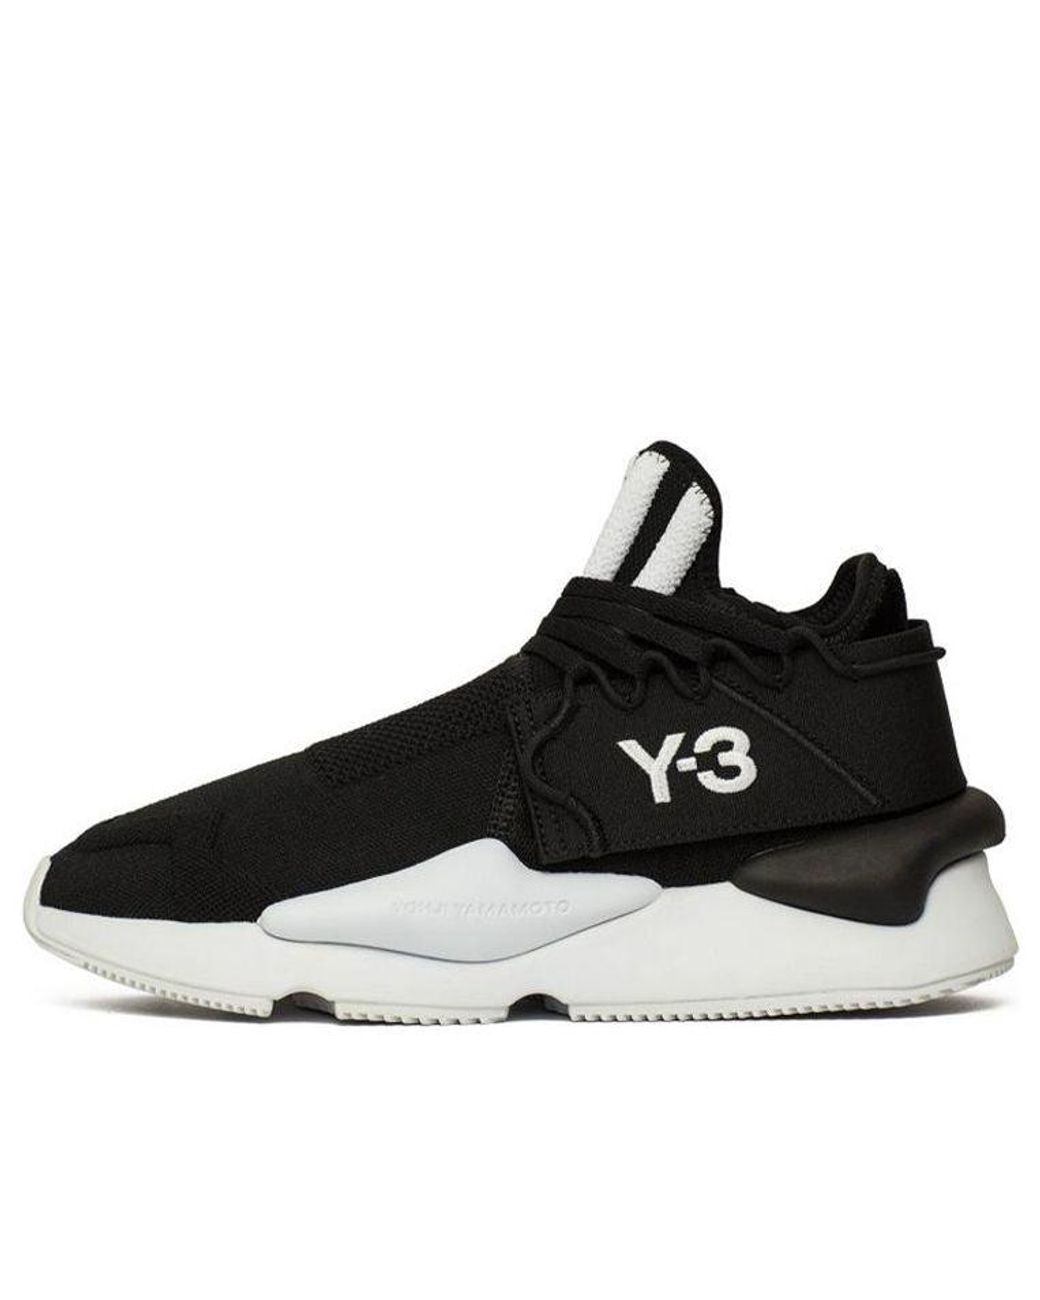 Y-3 Kaiwa Sneakers Black/white for Men | Lyst